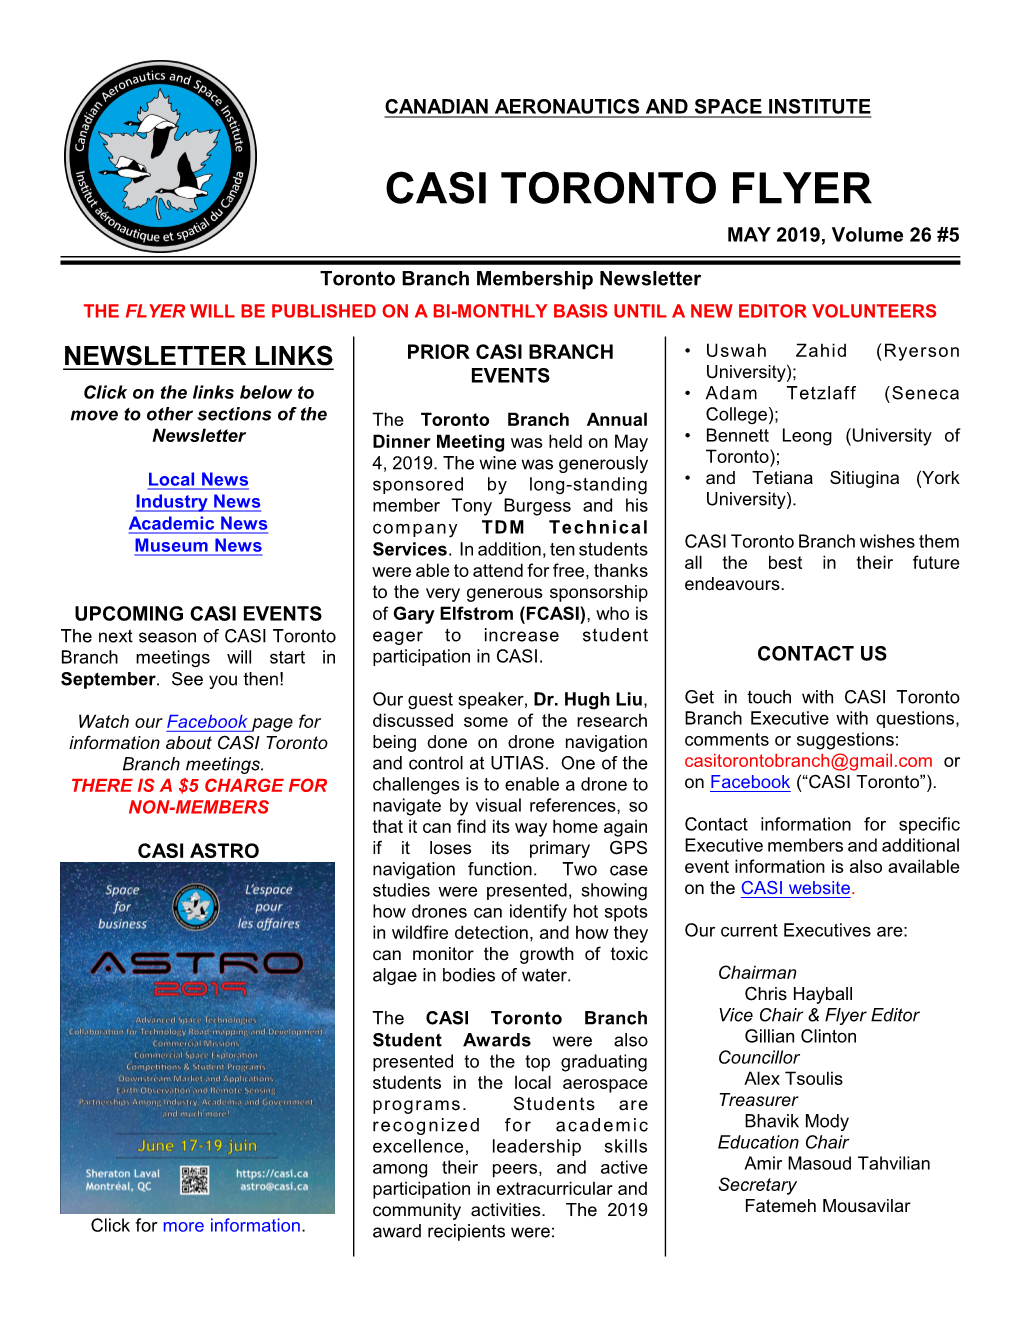 CASI TORONTO FLYER MAY 2019, Volume 26 #5